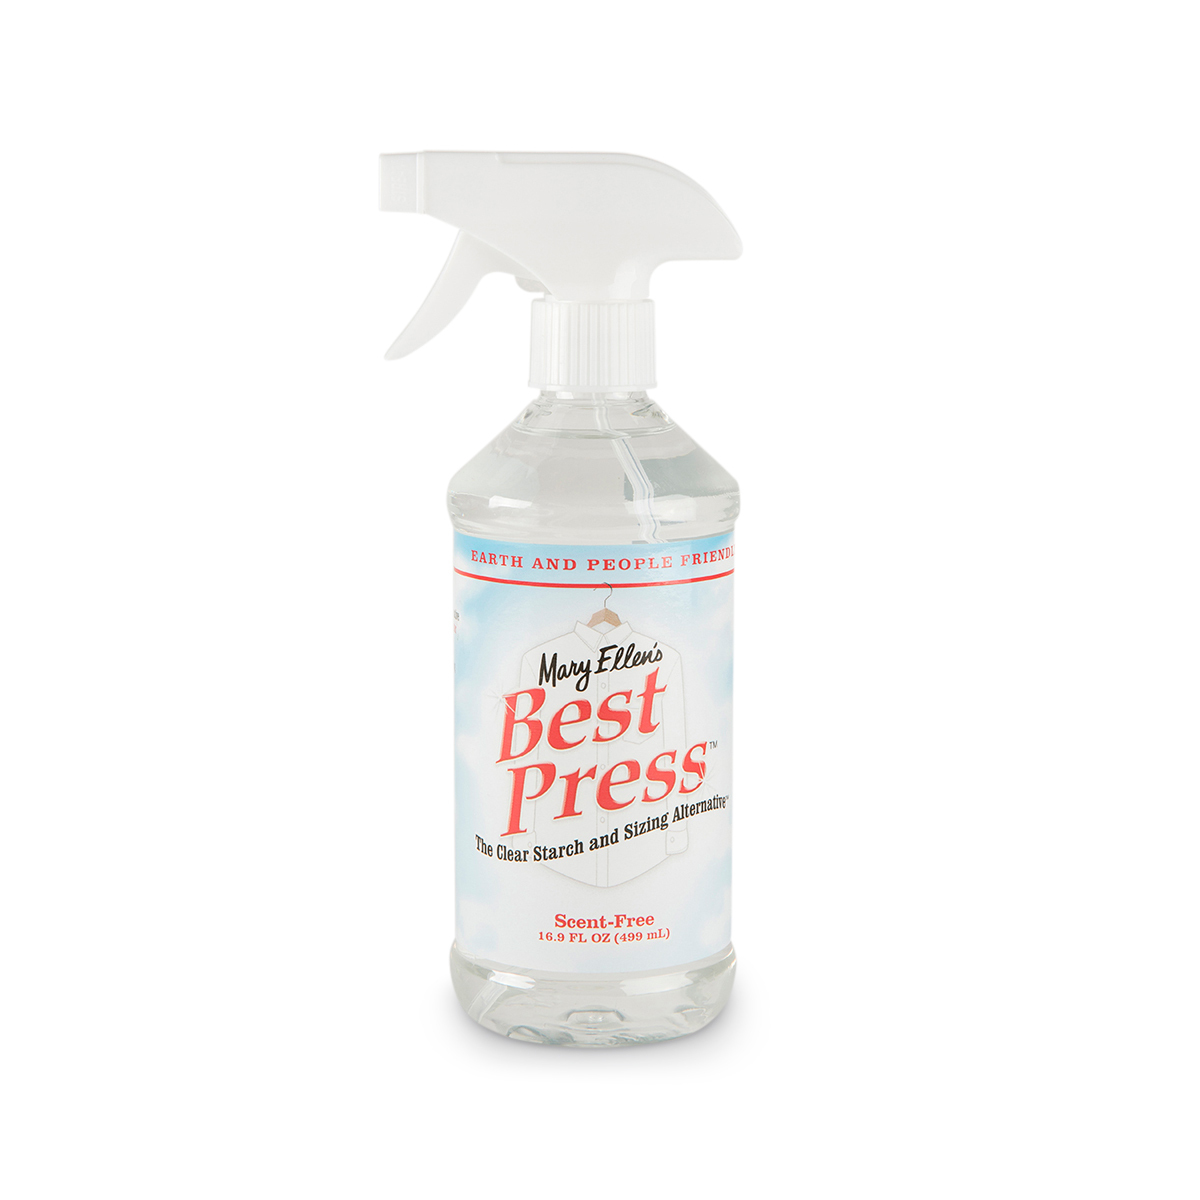 The Other Best Press 2 Spray Starch, Mary Ellen's #60240